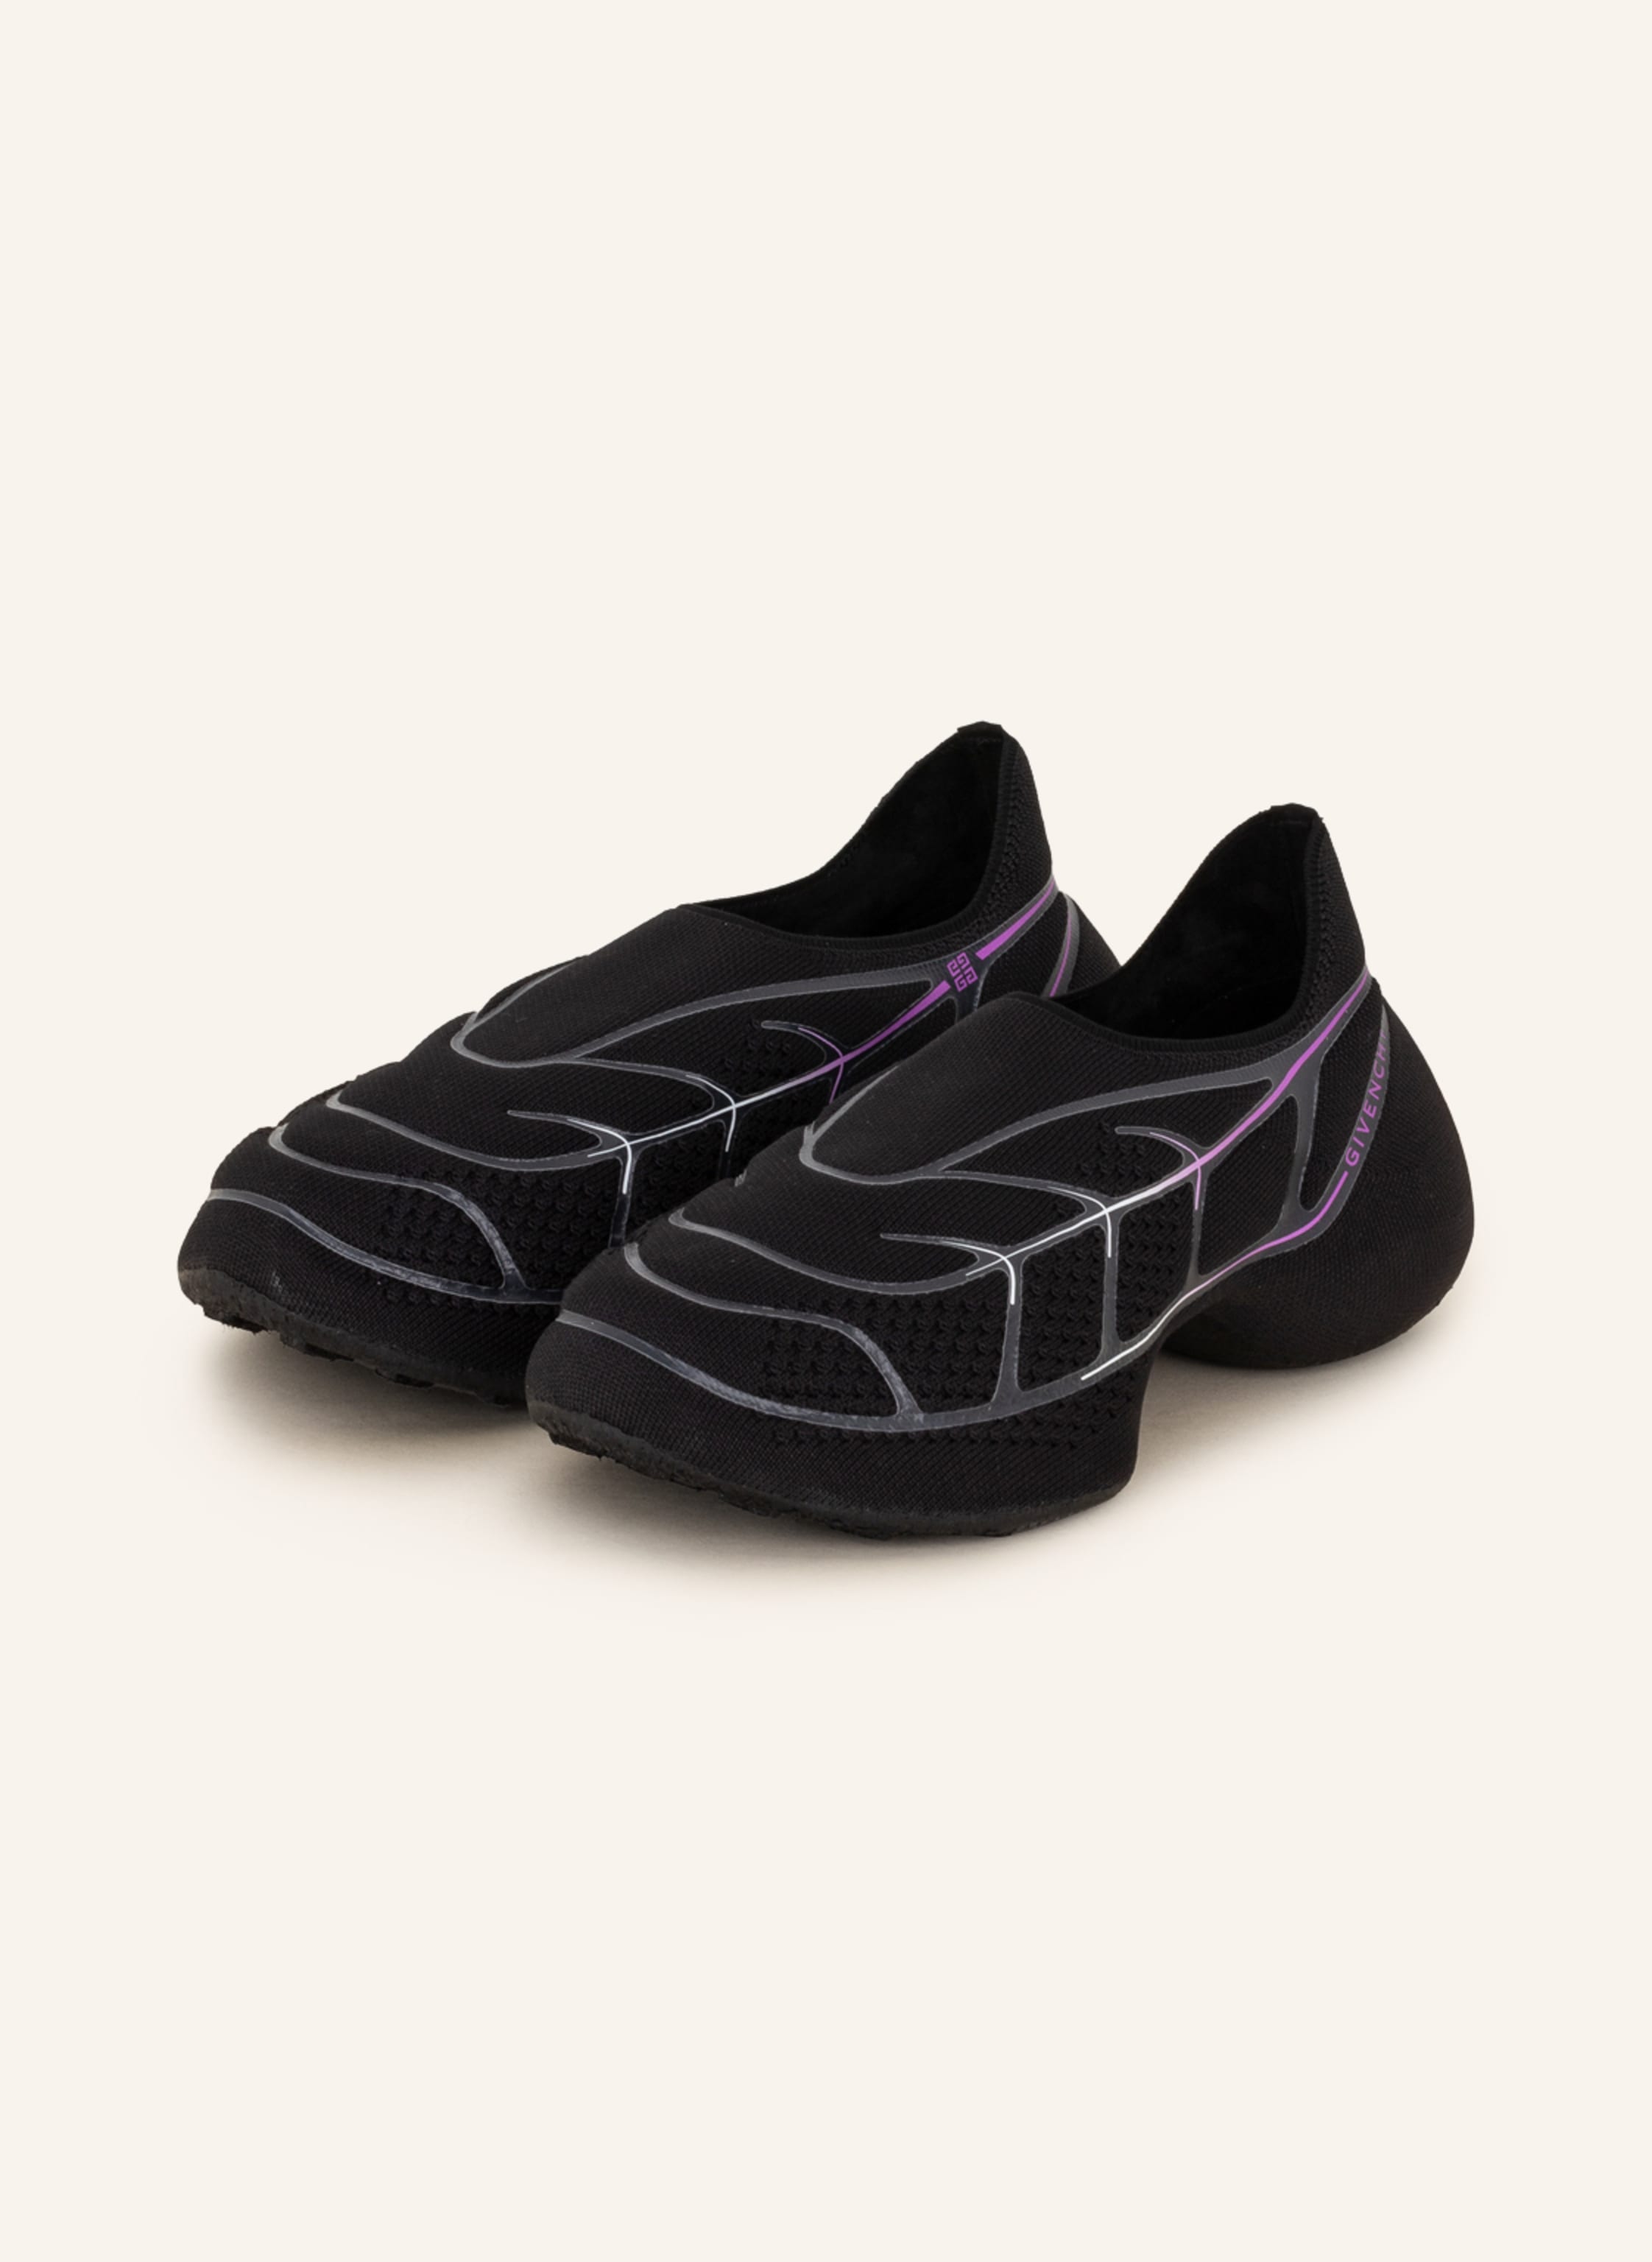 GIVENCHY Sneakers TK-360 PLUS in black | Breuninger